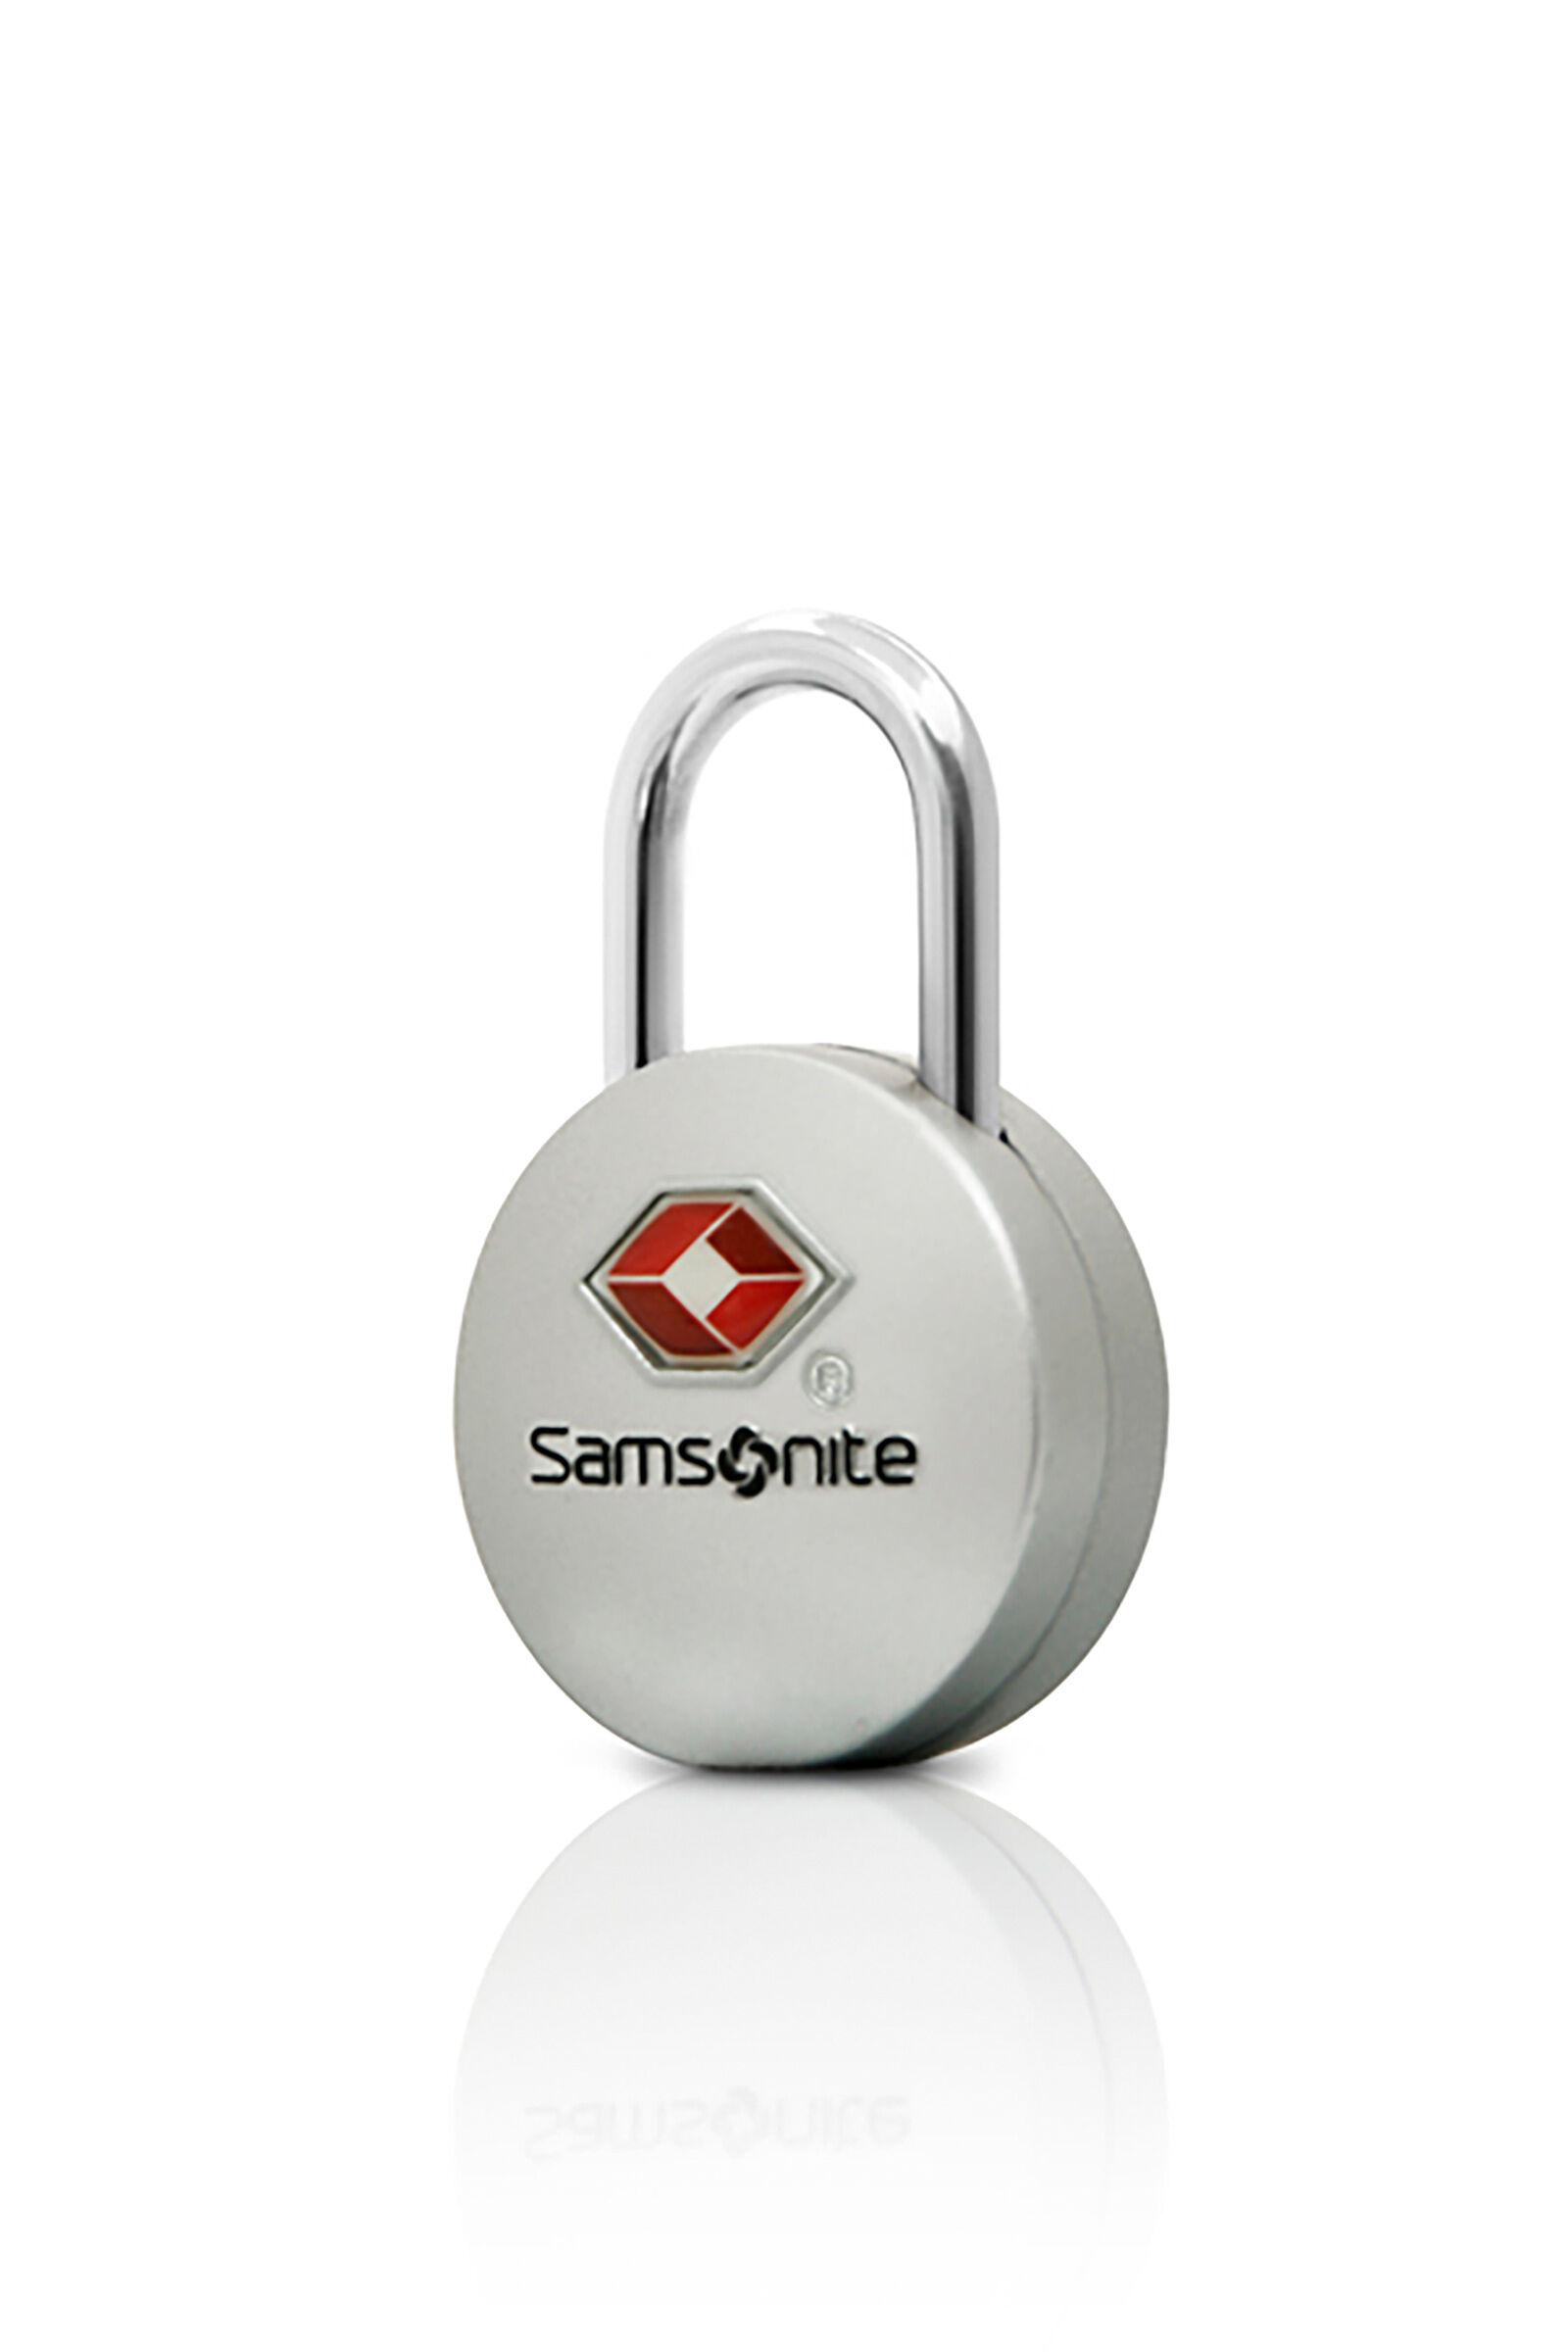 Samsonite 2-Pack TSA Approved Luggage Key Locks for Travel 